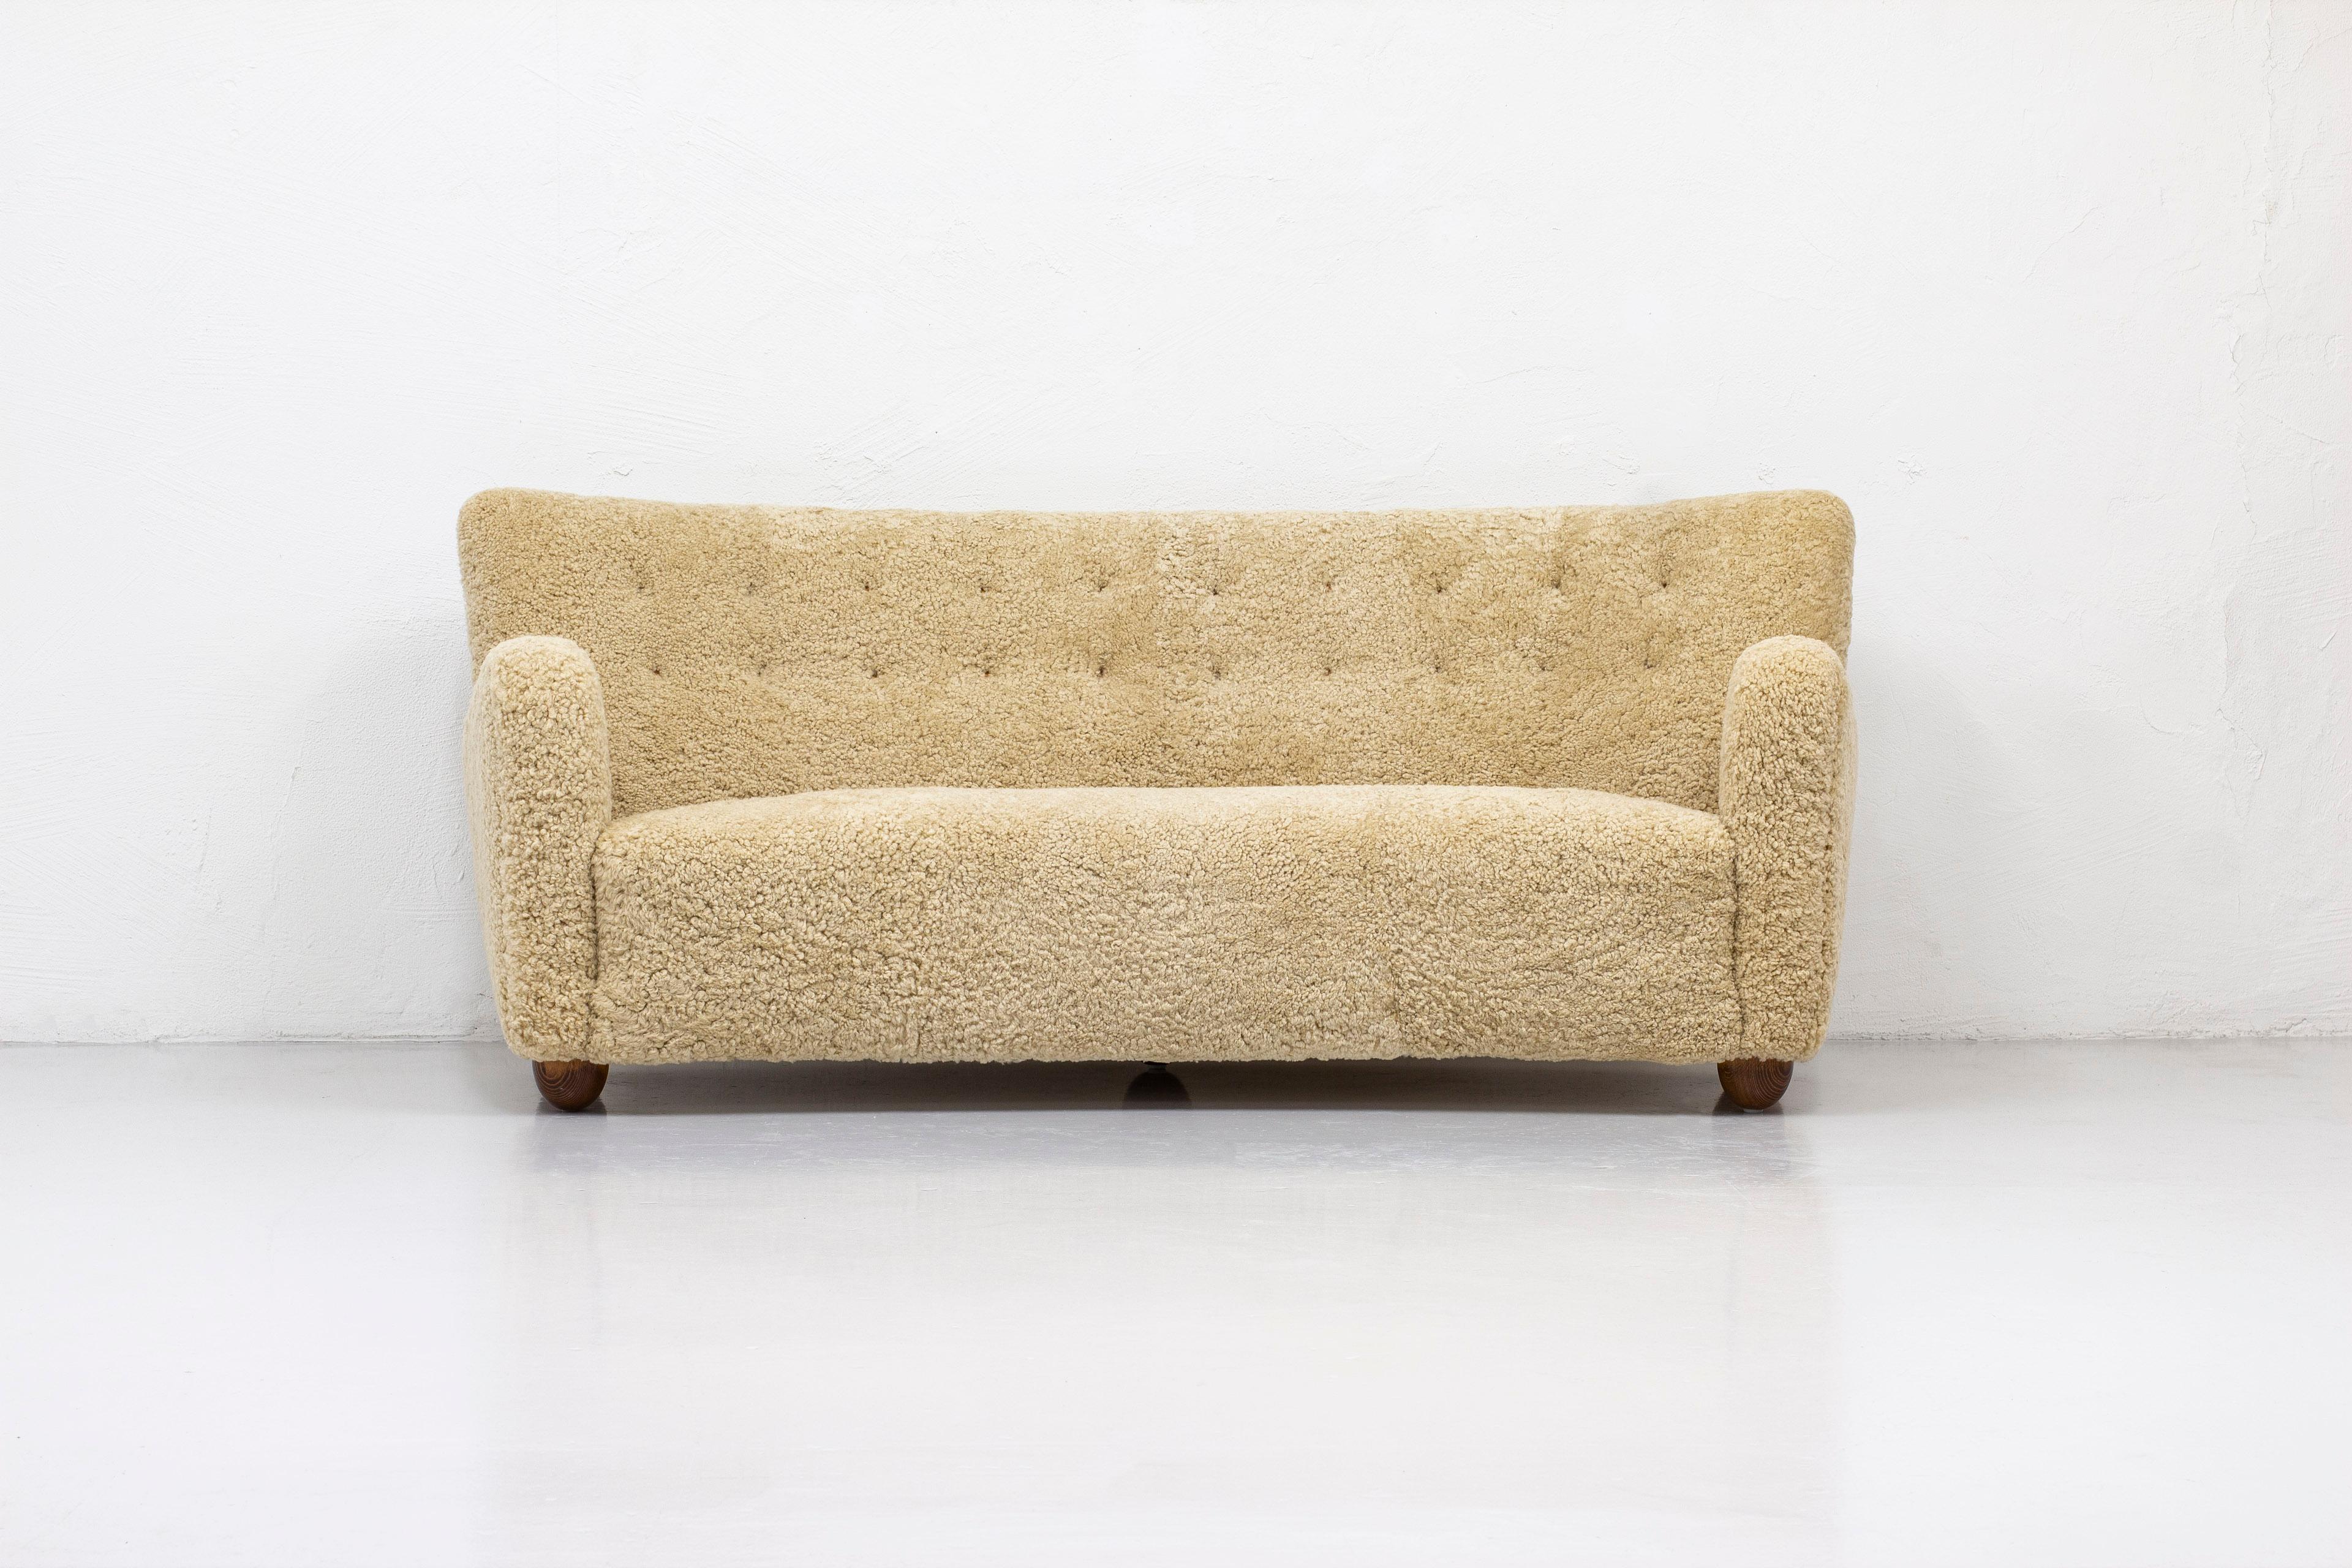 Swedish Danish Modern Sofa with Sheepskin, Attributed to Flemming Lassen, 1940s